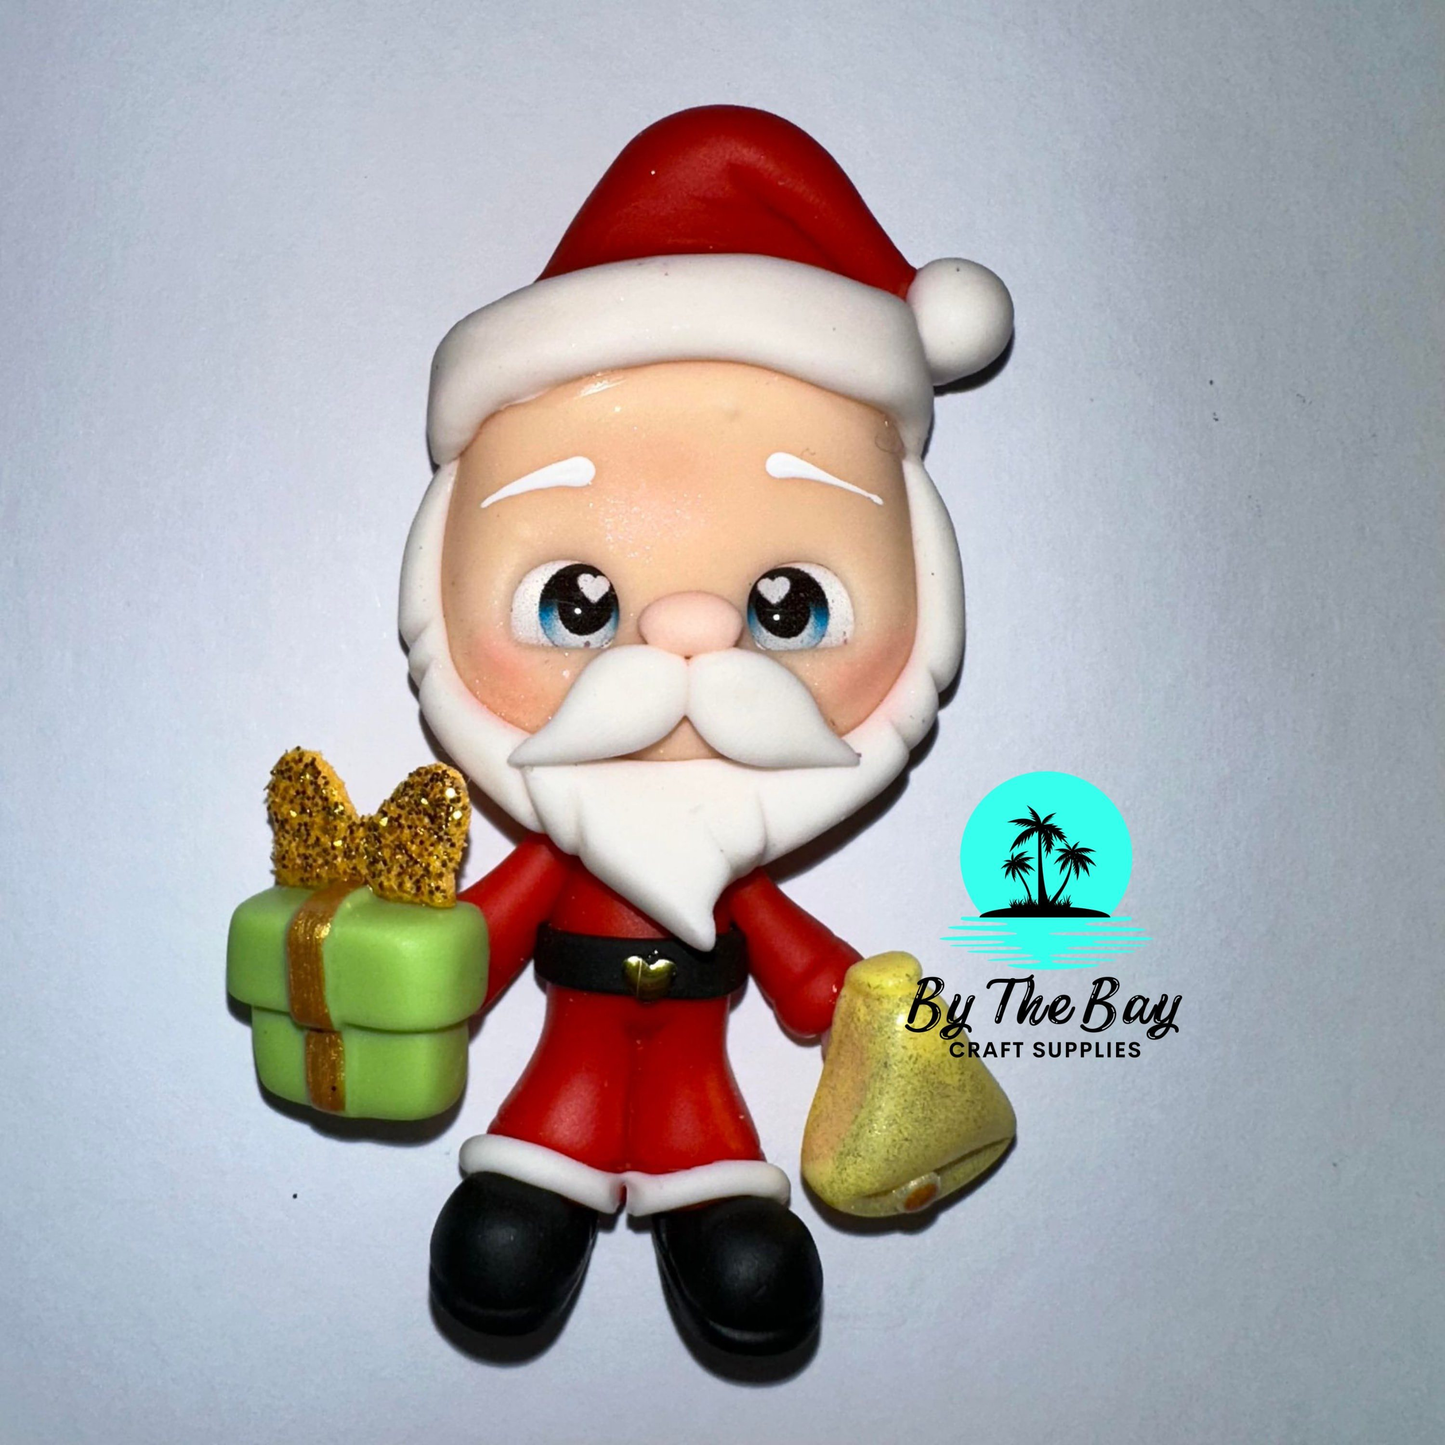 Santa with gift